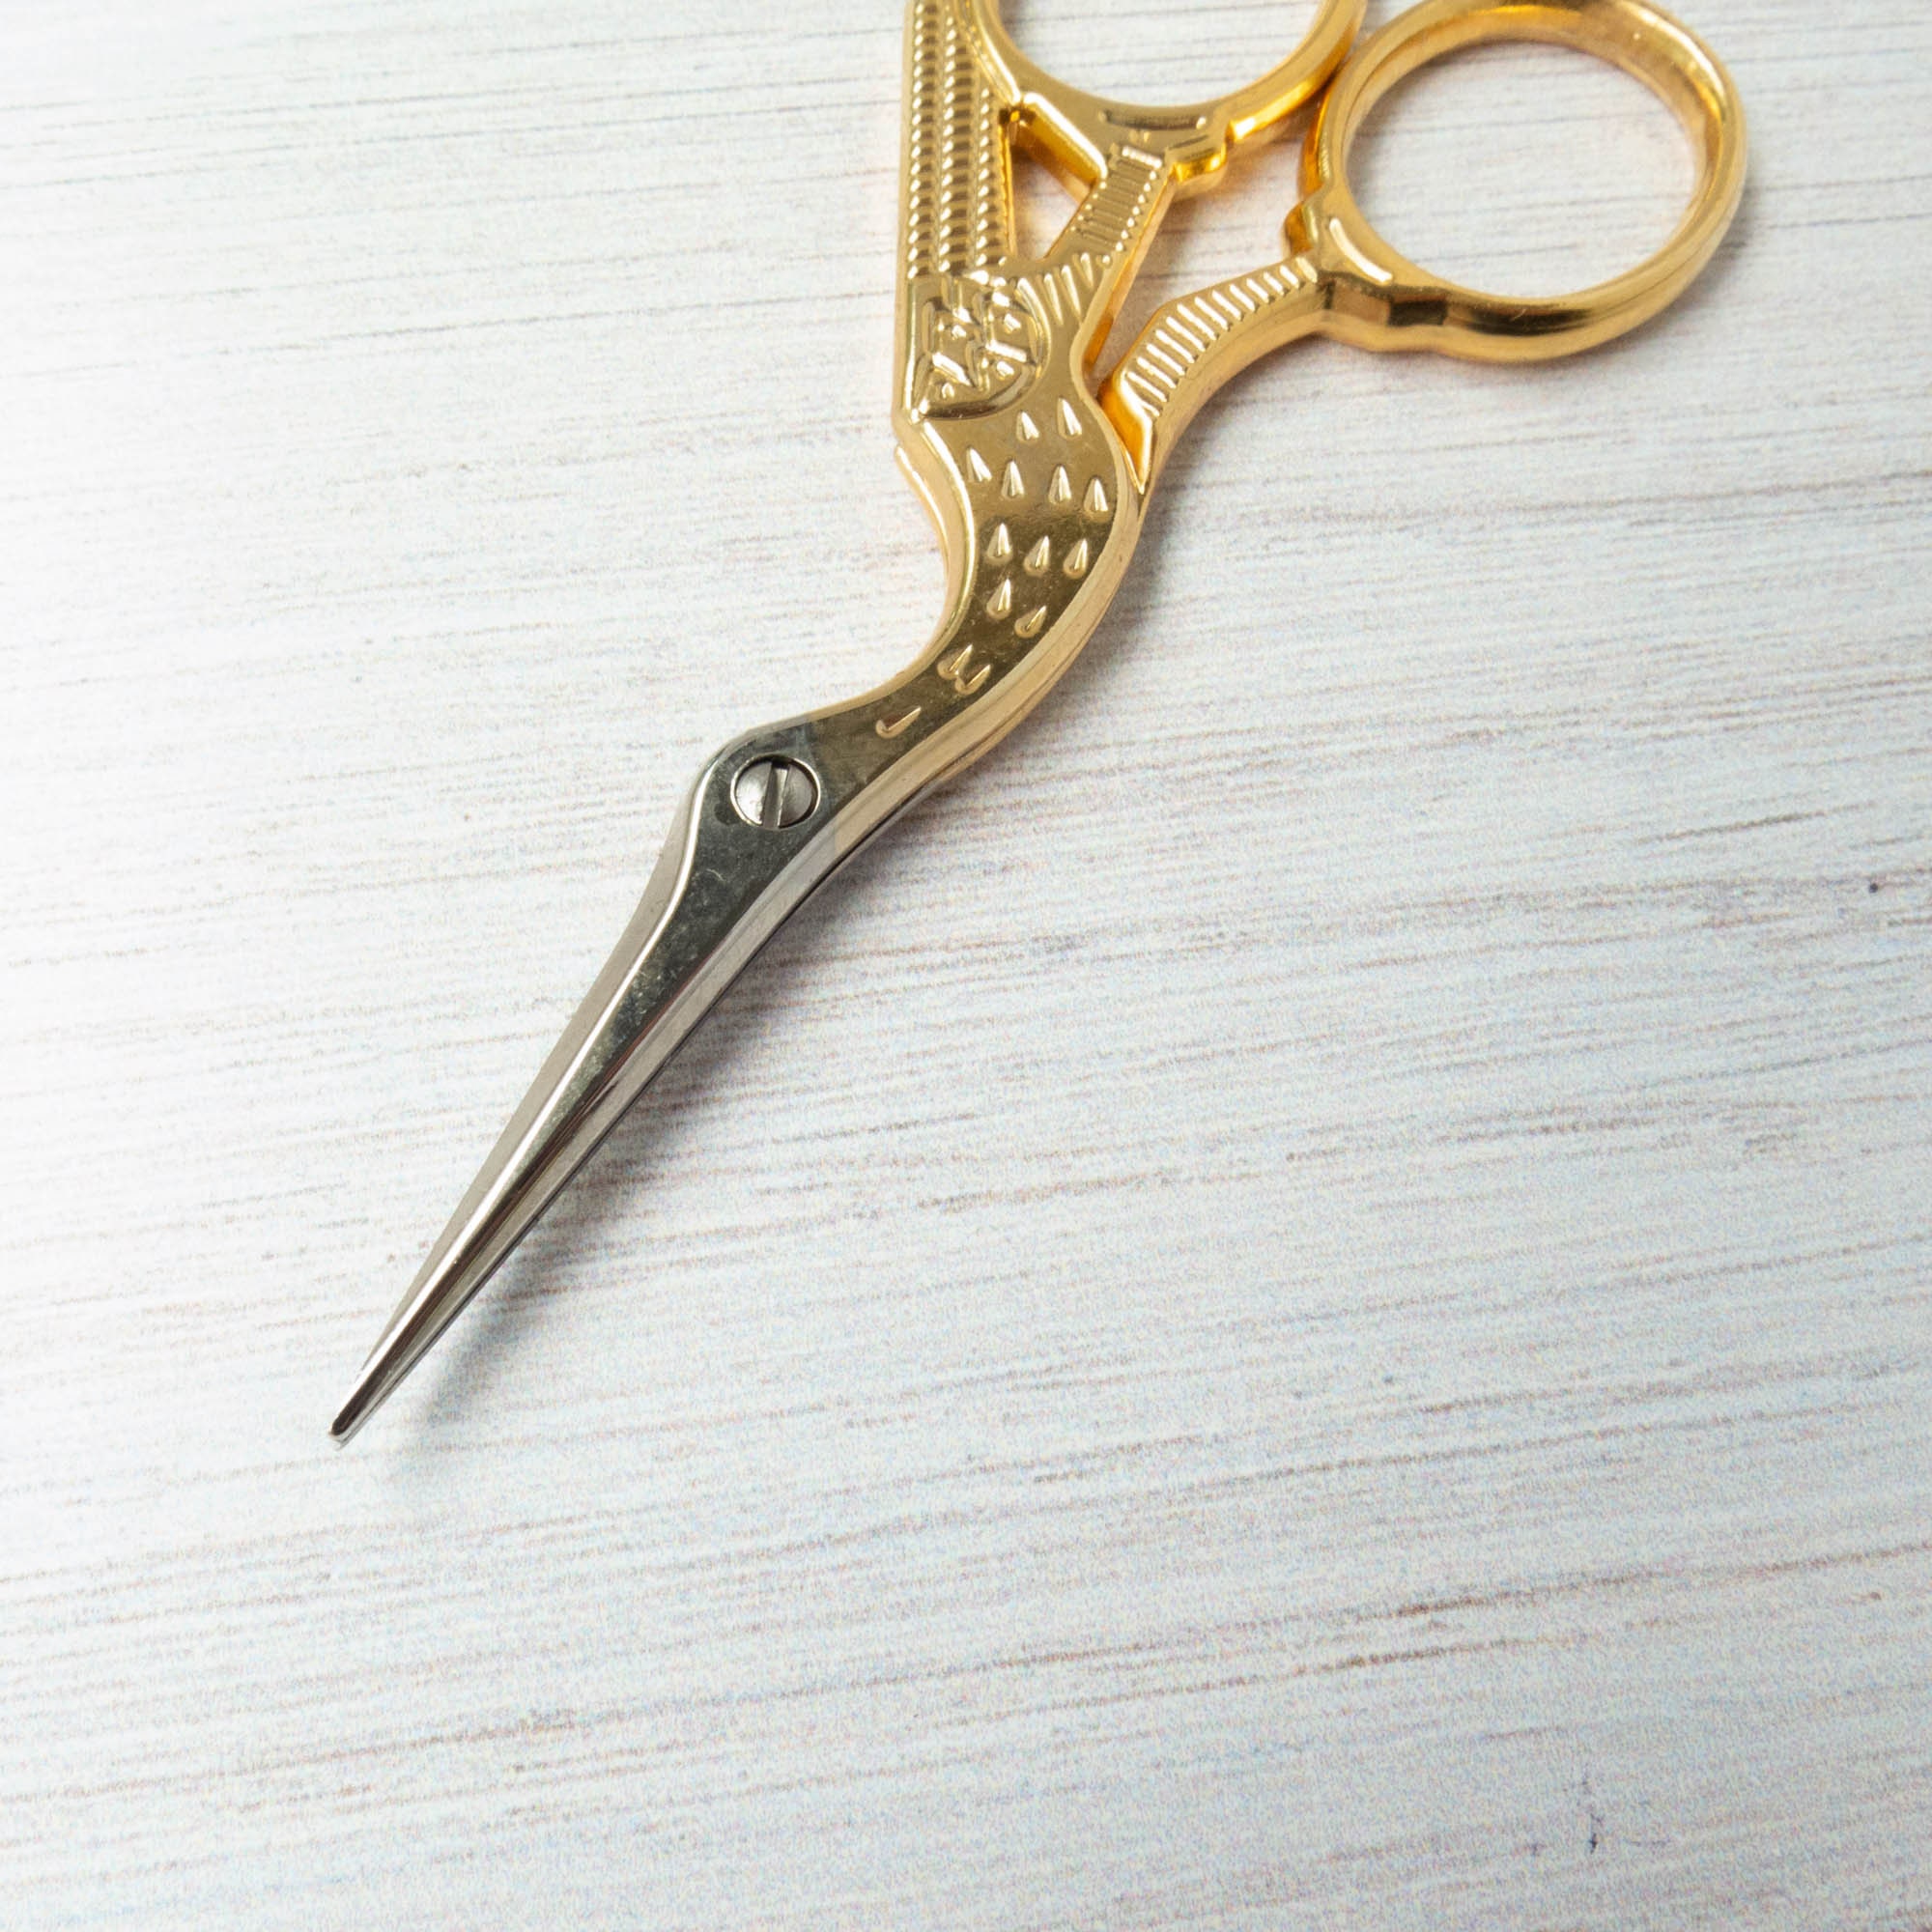 AllStitch 3.5 Gold Stork Embroidery Scissors